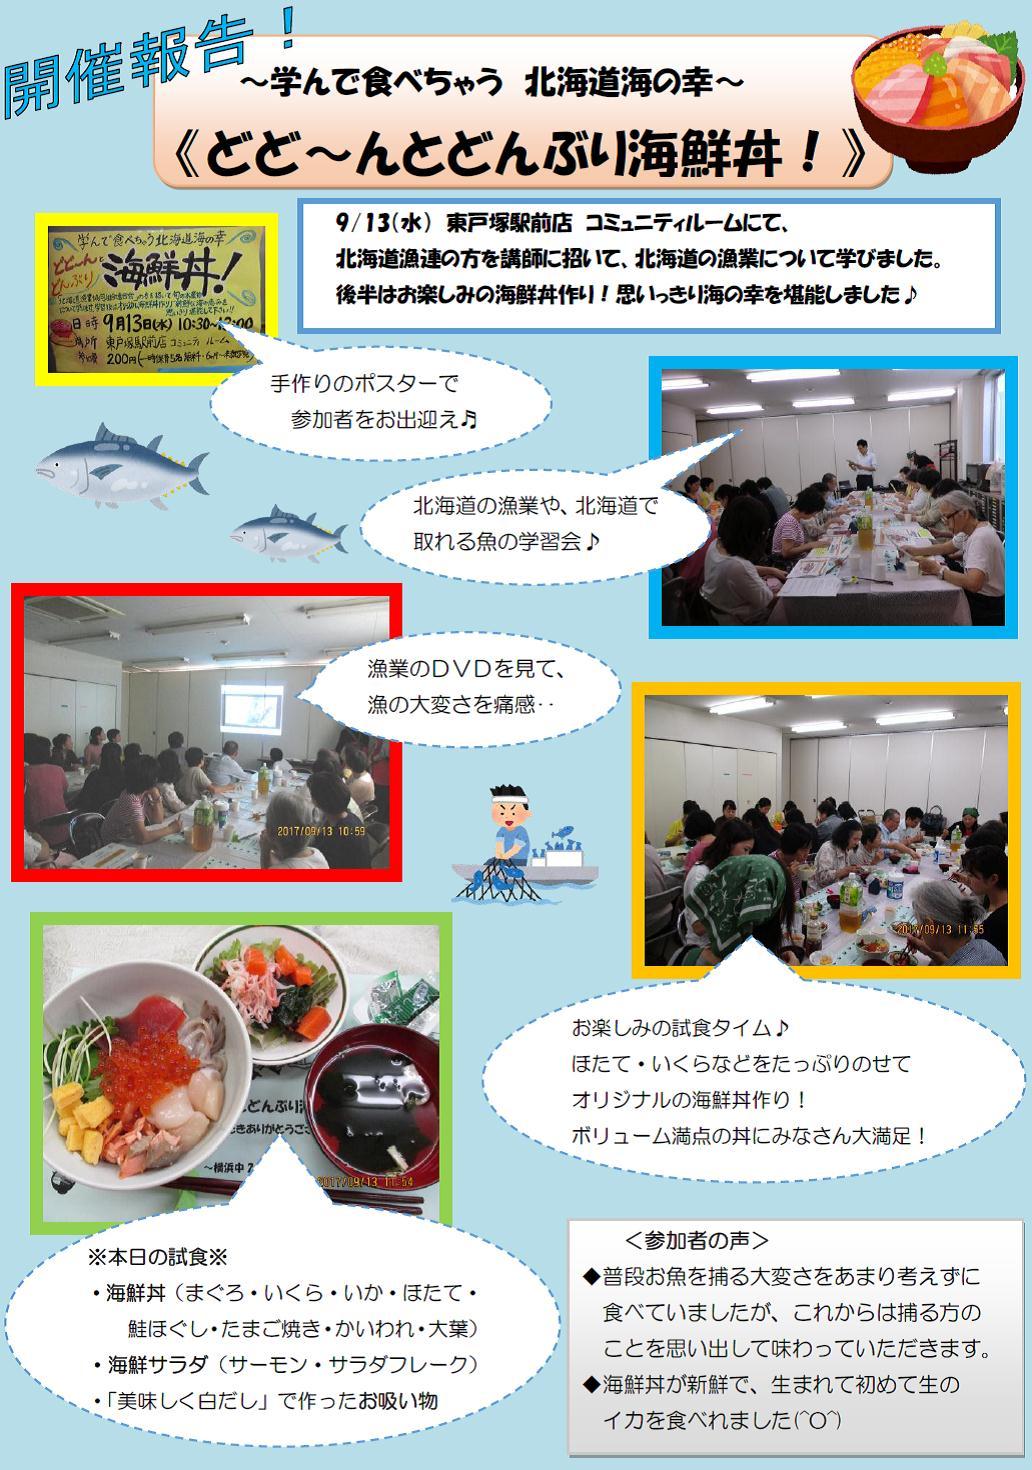 http://kanagawa.ucoop.or.jp/hiroba/areanews/files/naka2%2020170913.jpg